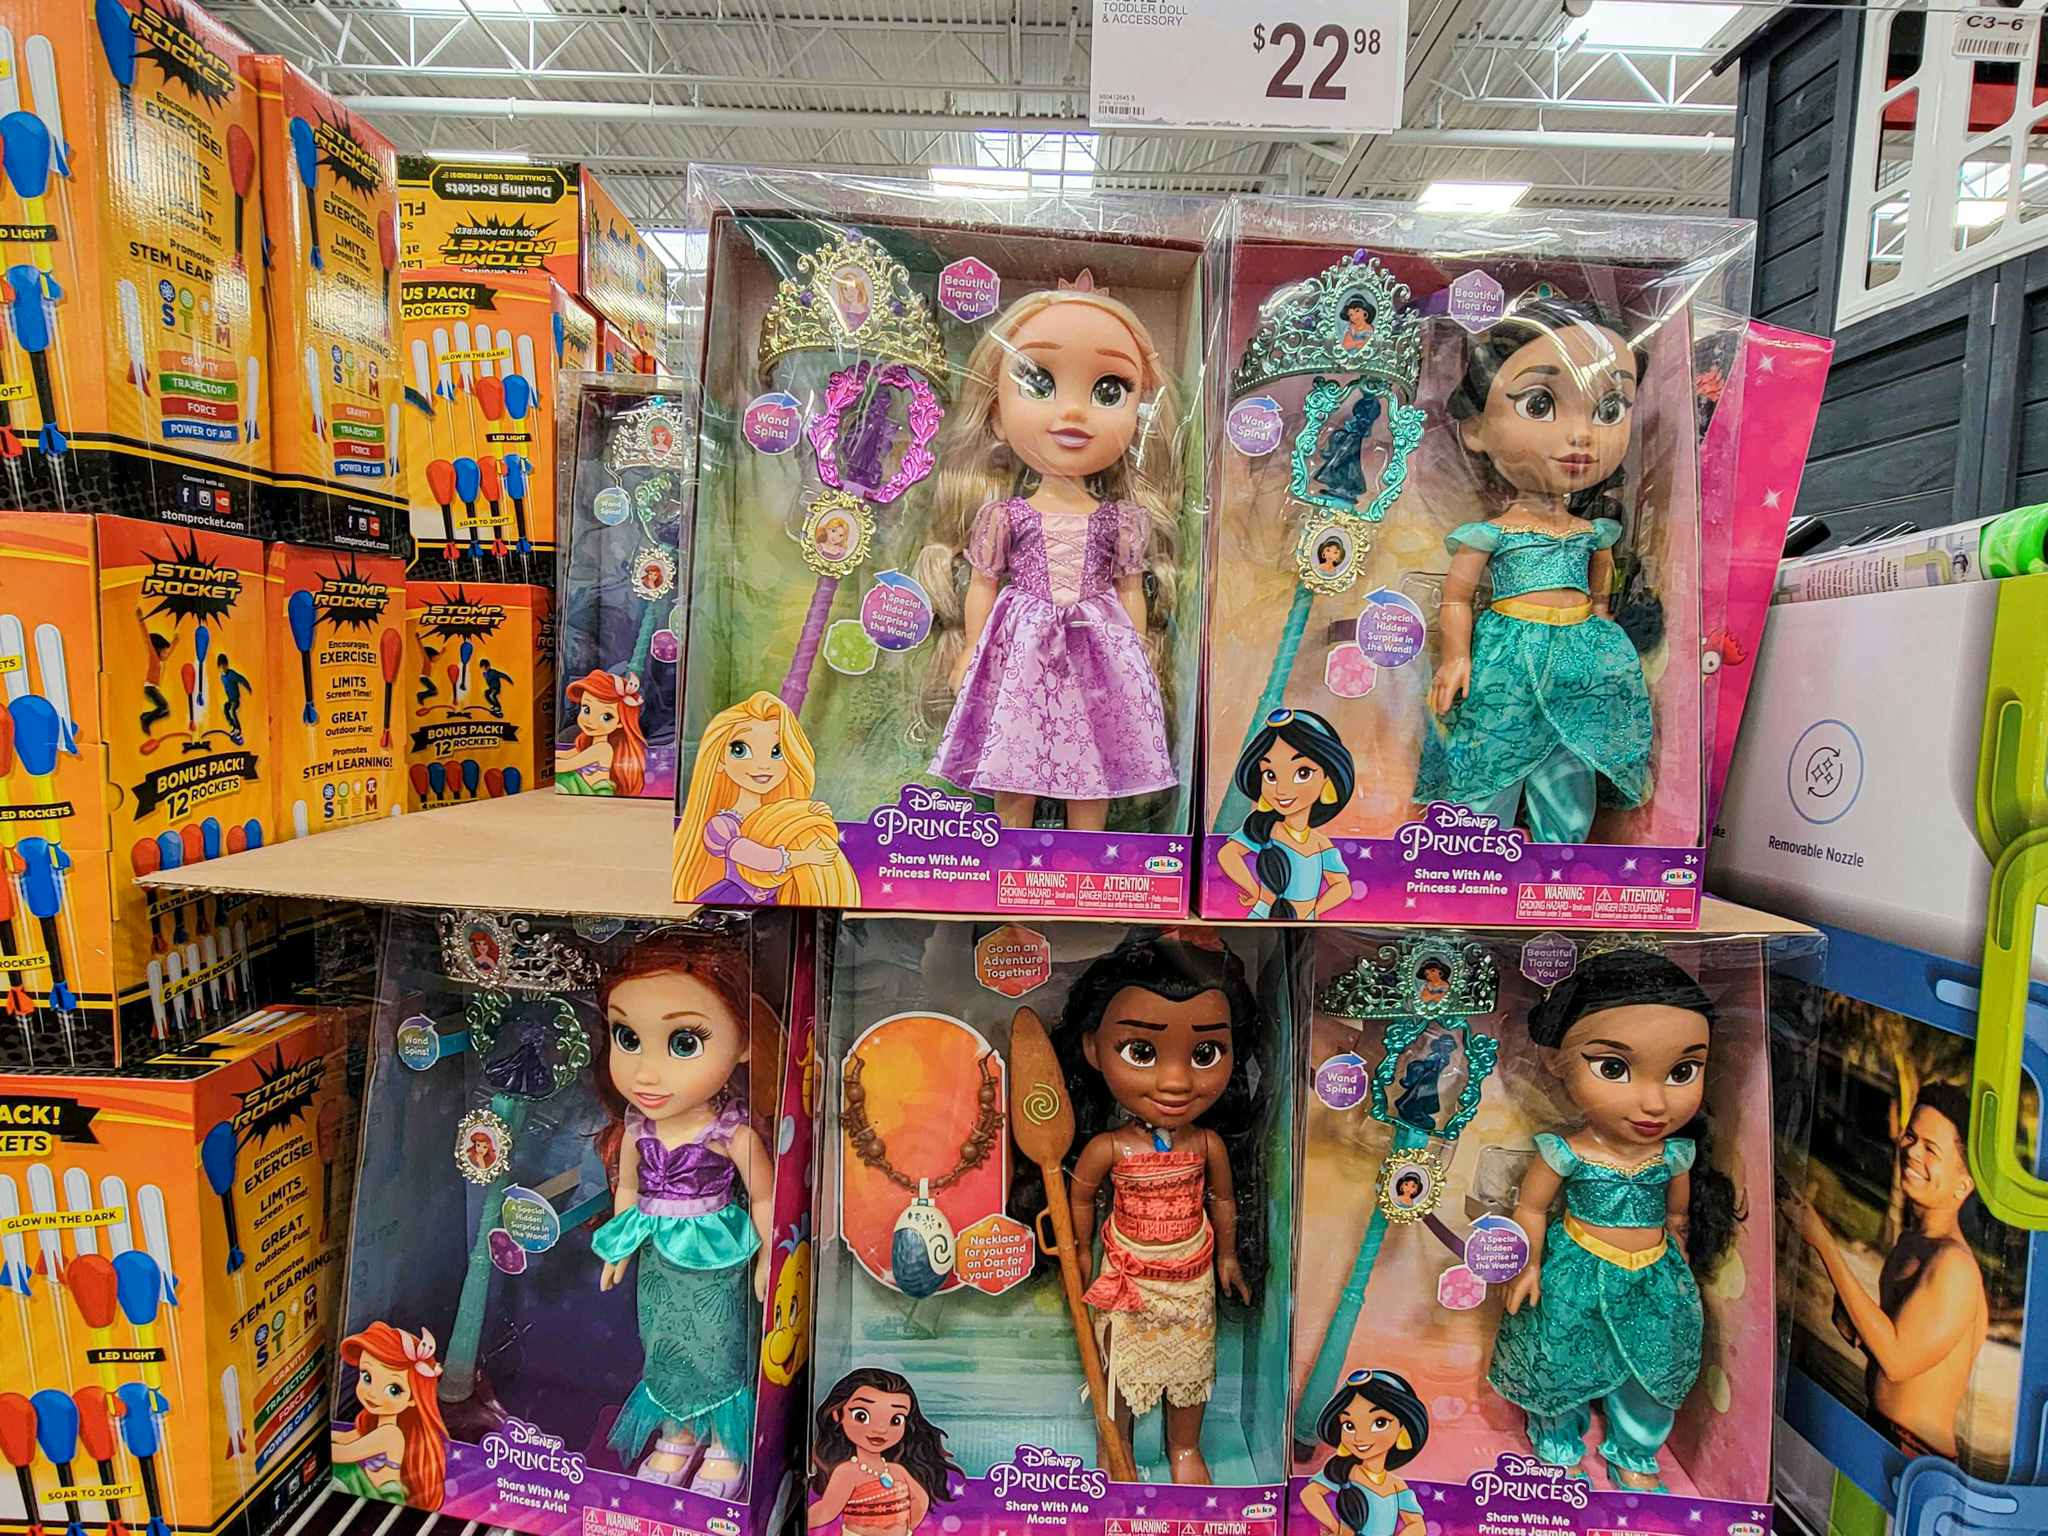 a variety of disney princess dolls, rapunzel, moana, ariel, jasmine